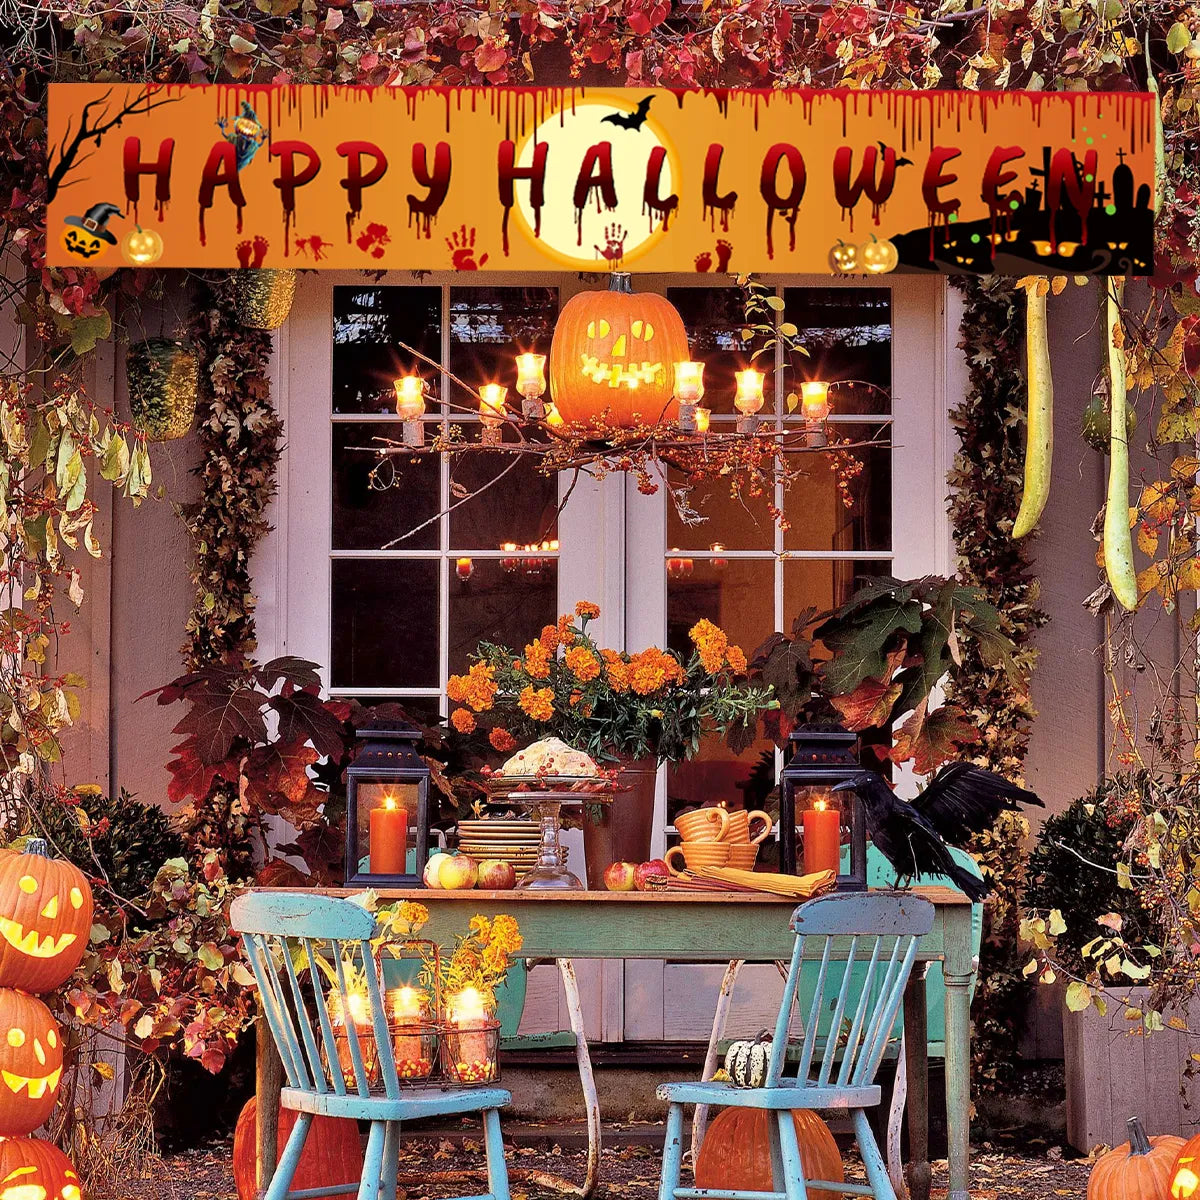 Spook-Tacular Halloween Festivity Banner